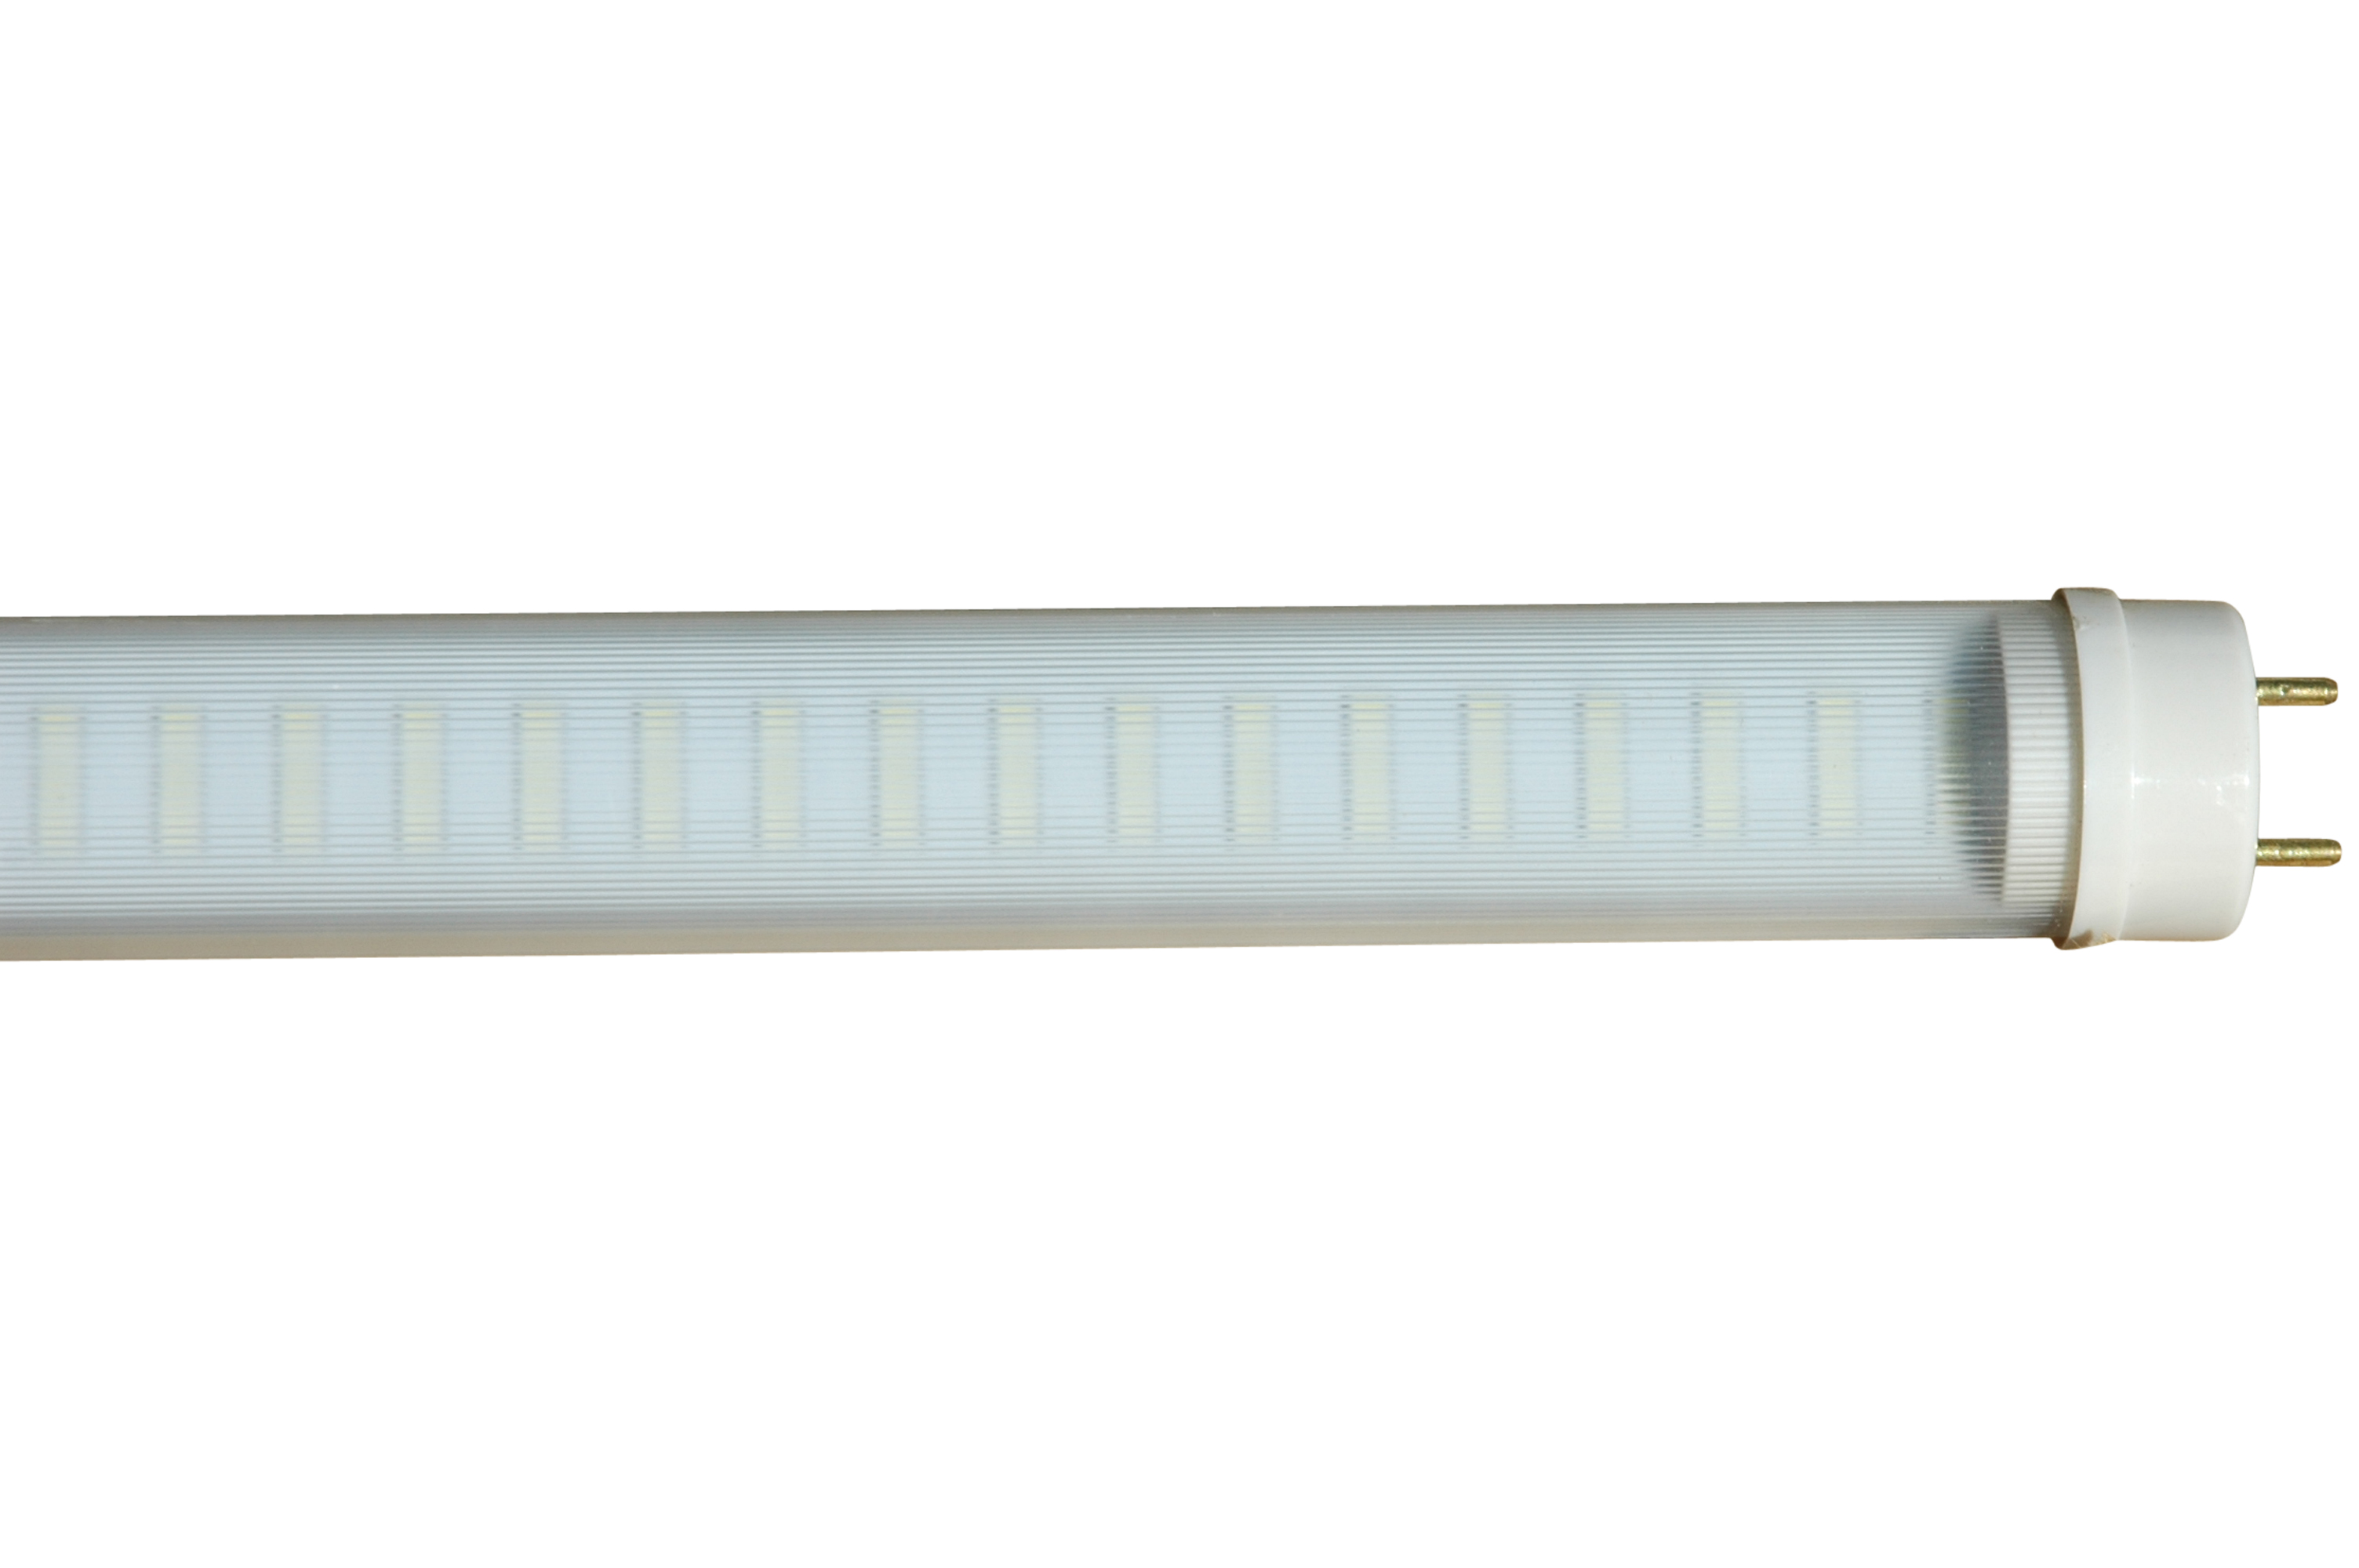 Dimmable 23 Watt LED Tube that produces 2,415 lumens per bulb